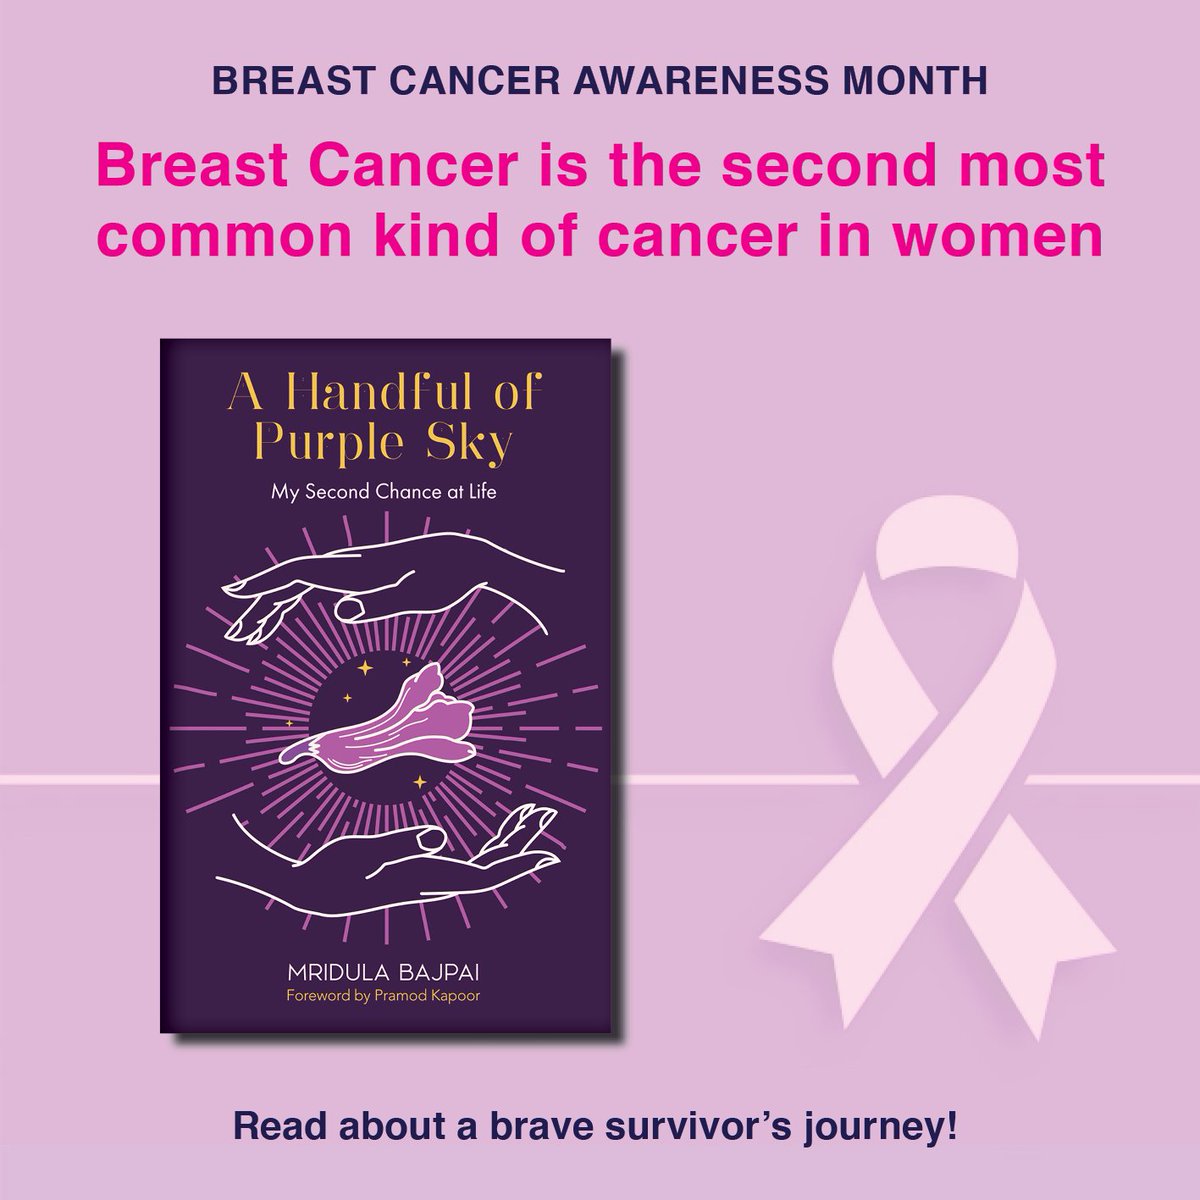 Read Mridula Bajpai's inspiring story of conquering cancer.
 amazon.in/dp/9390924596/…

#ahandfulofpurplesky #mridulabajpai #memoir #inspirational #journeyoflife #amaryllispublishing #manjulpublishinghouse #breastcancerawareness #BreastCancerAwarenessMonth